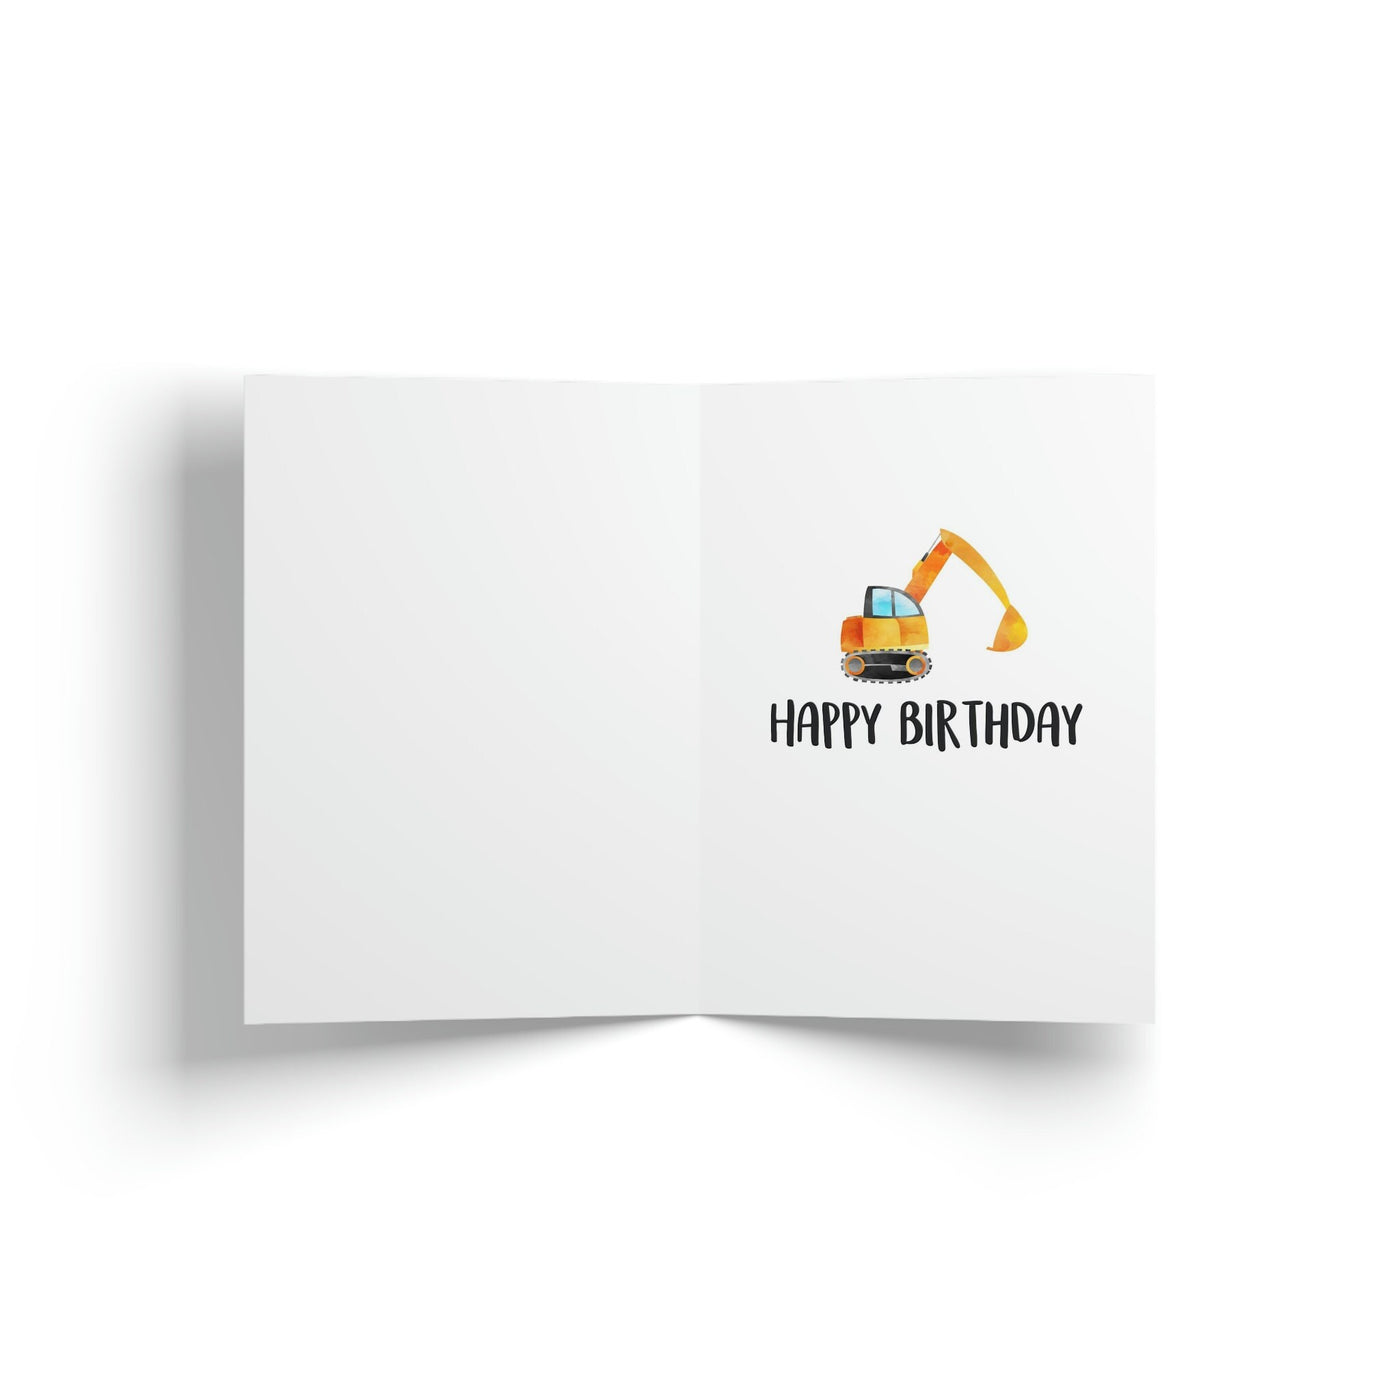 Happy birthday Card, Construction Birthday Card, Kids Birthday Greeting Card, Kid birthday personalized card, Boy construction birthday card